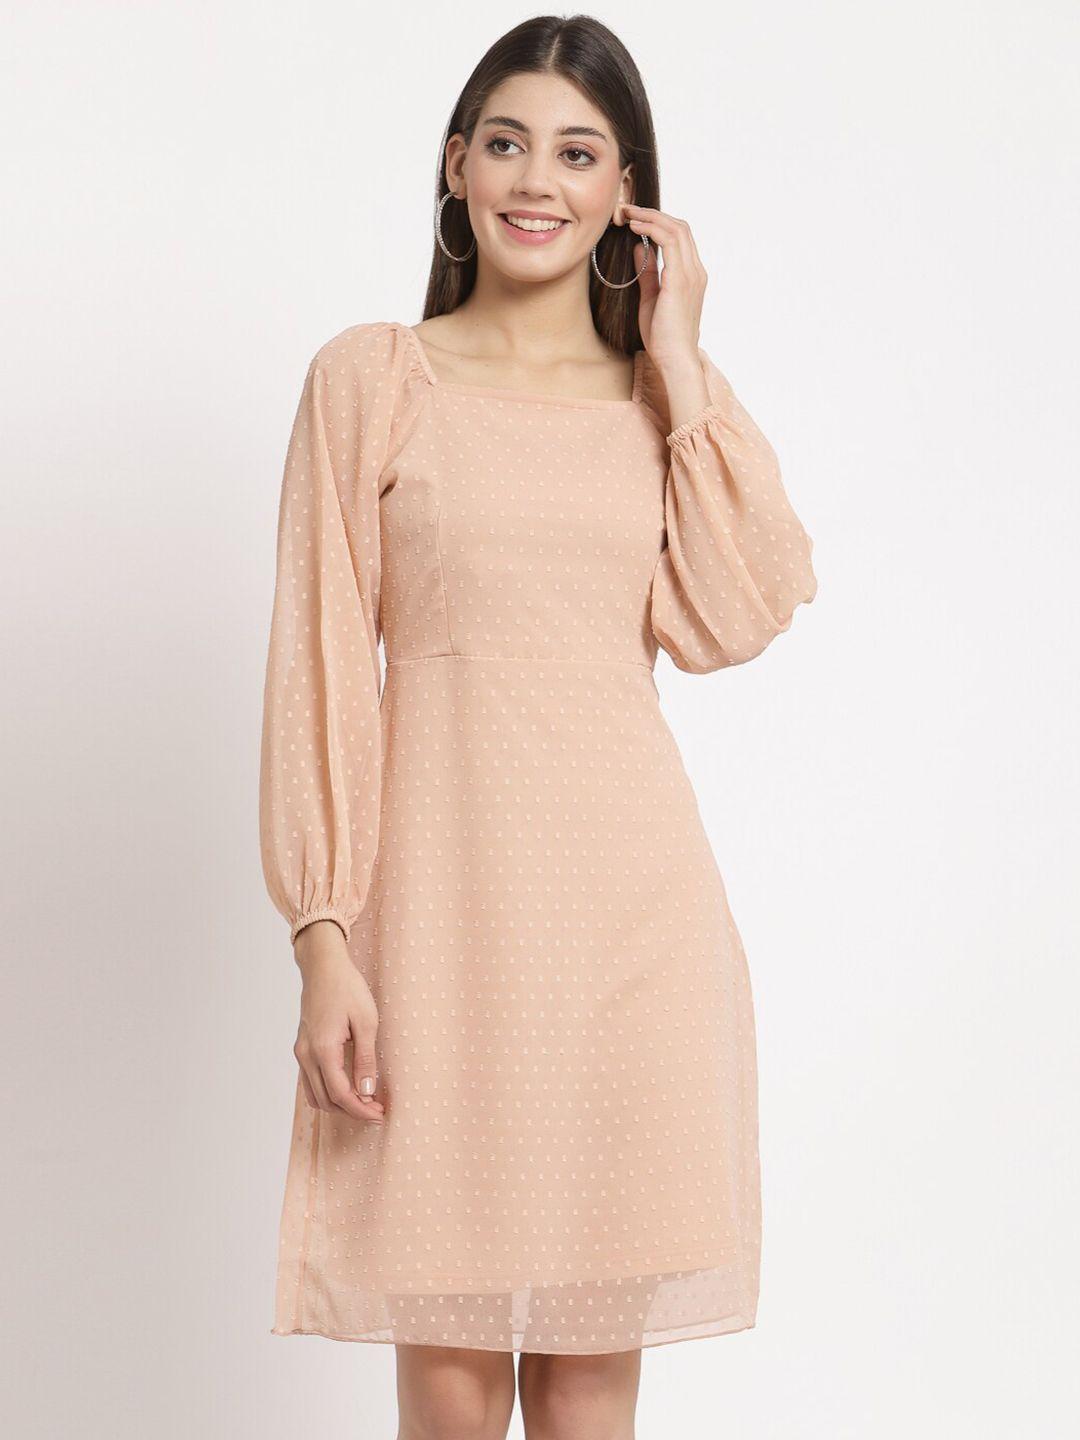 aayu women peach-coloured georgette a-line dress